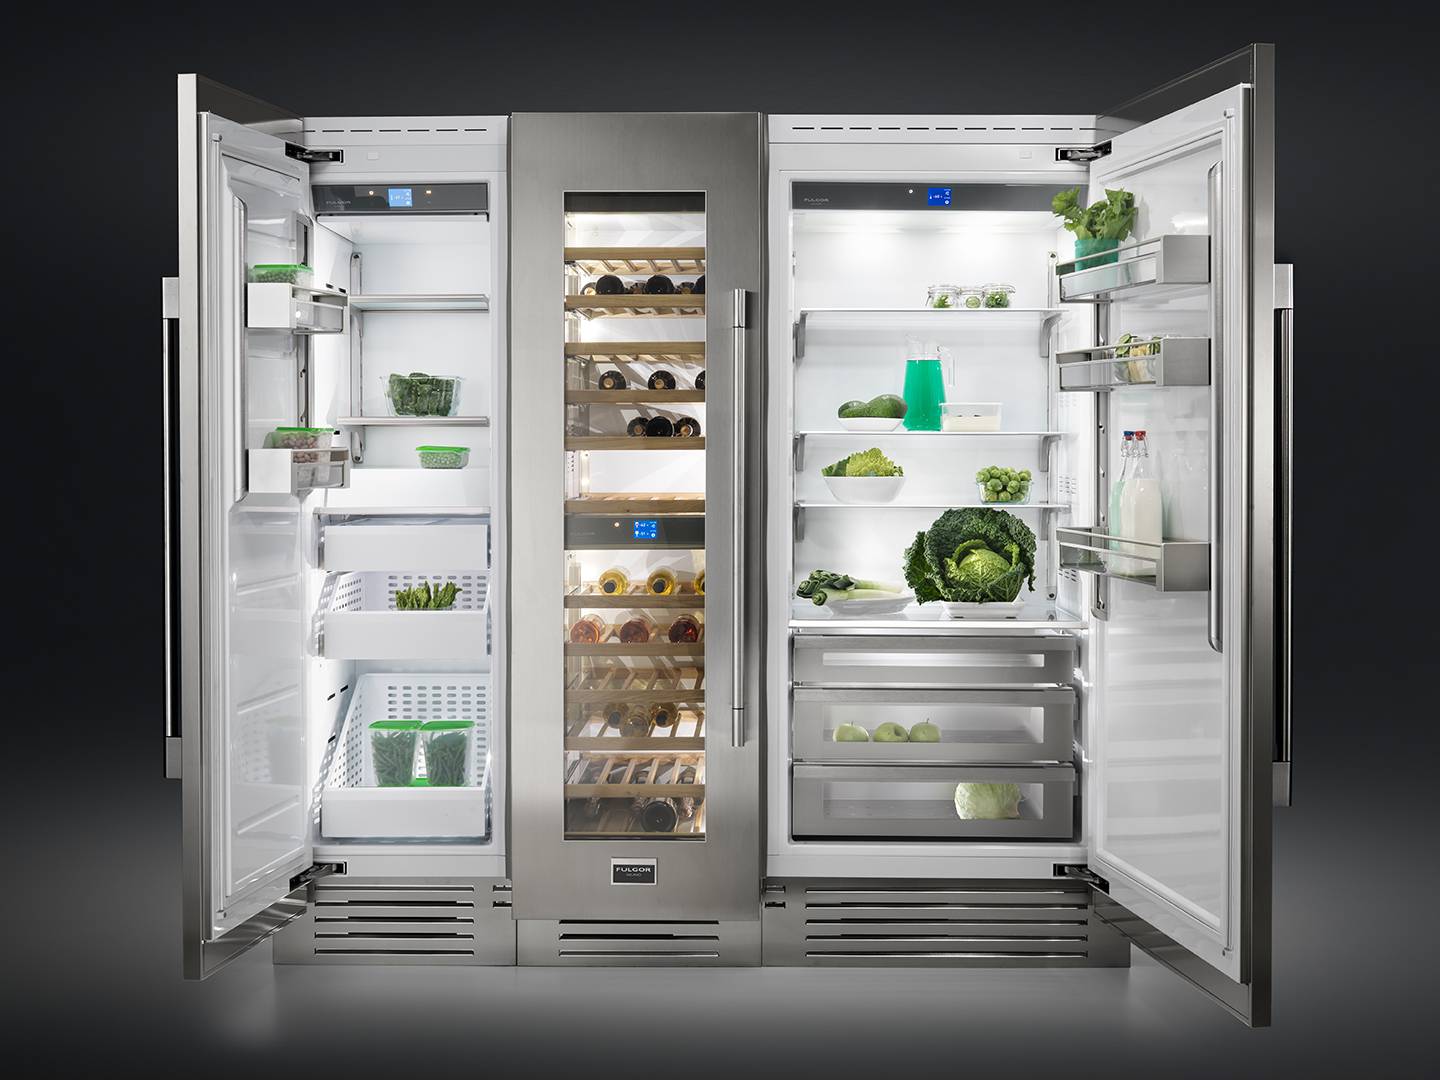 Fulgor Milano refrigerator